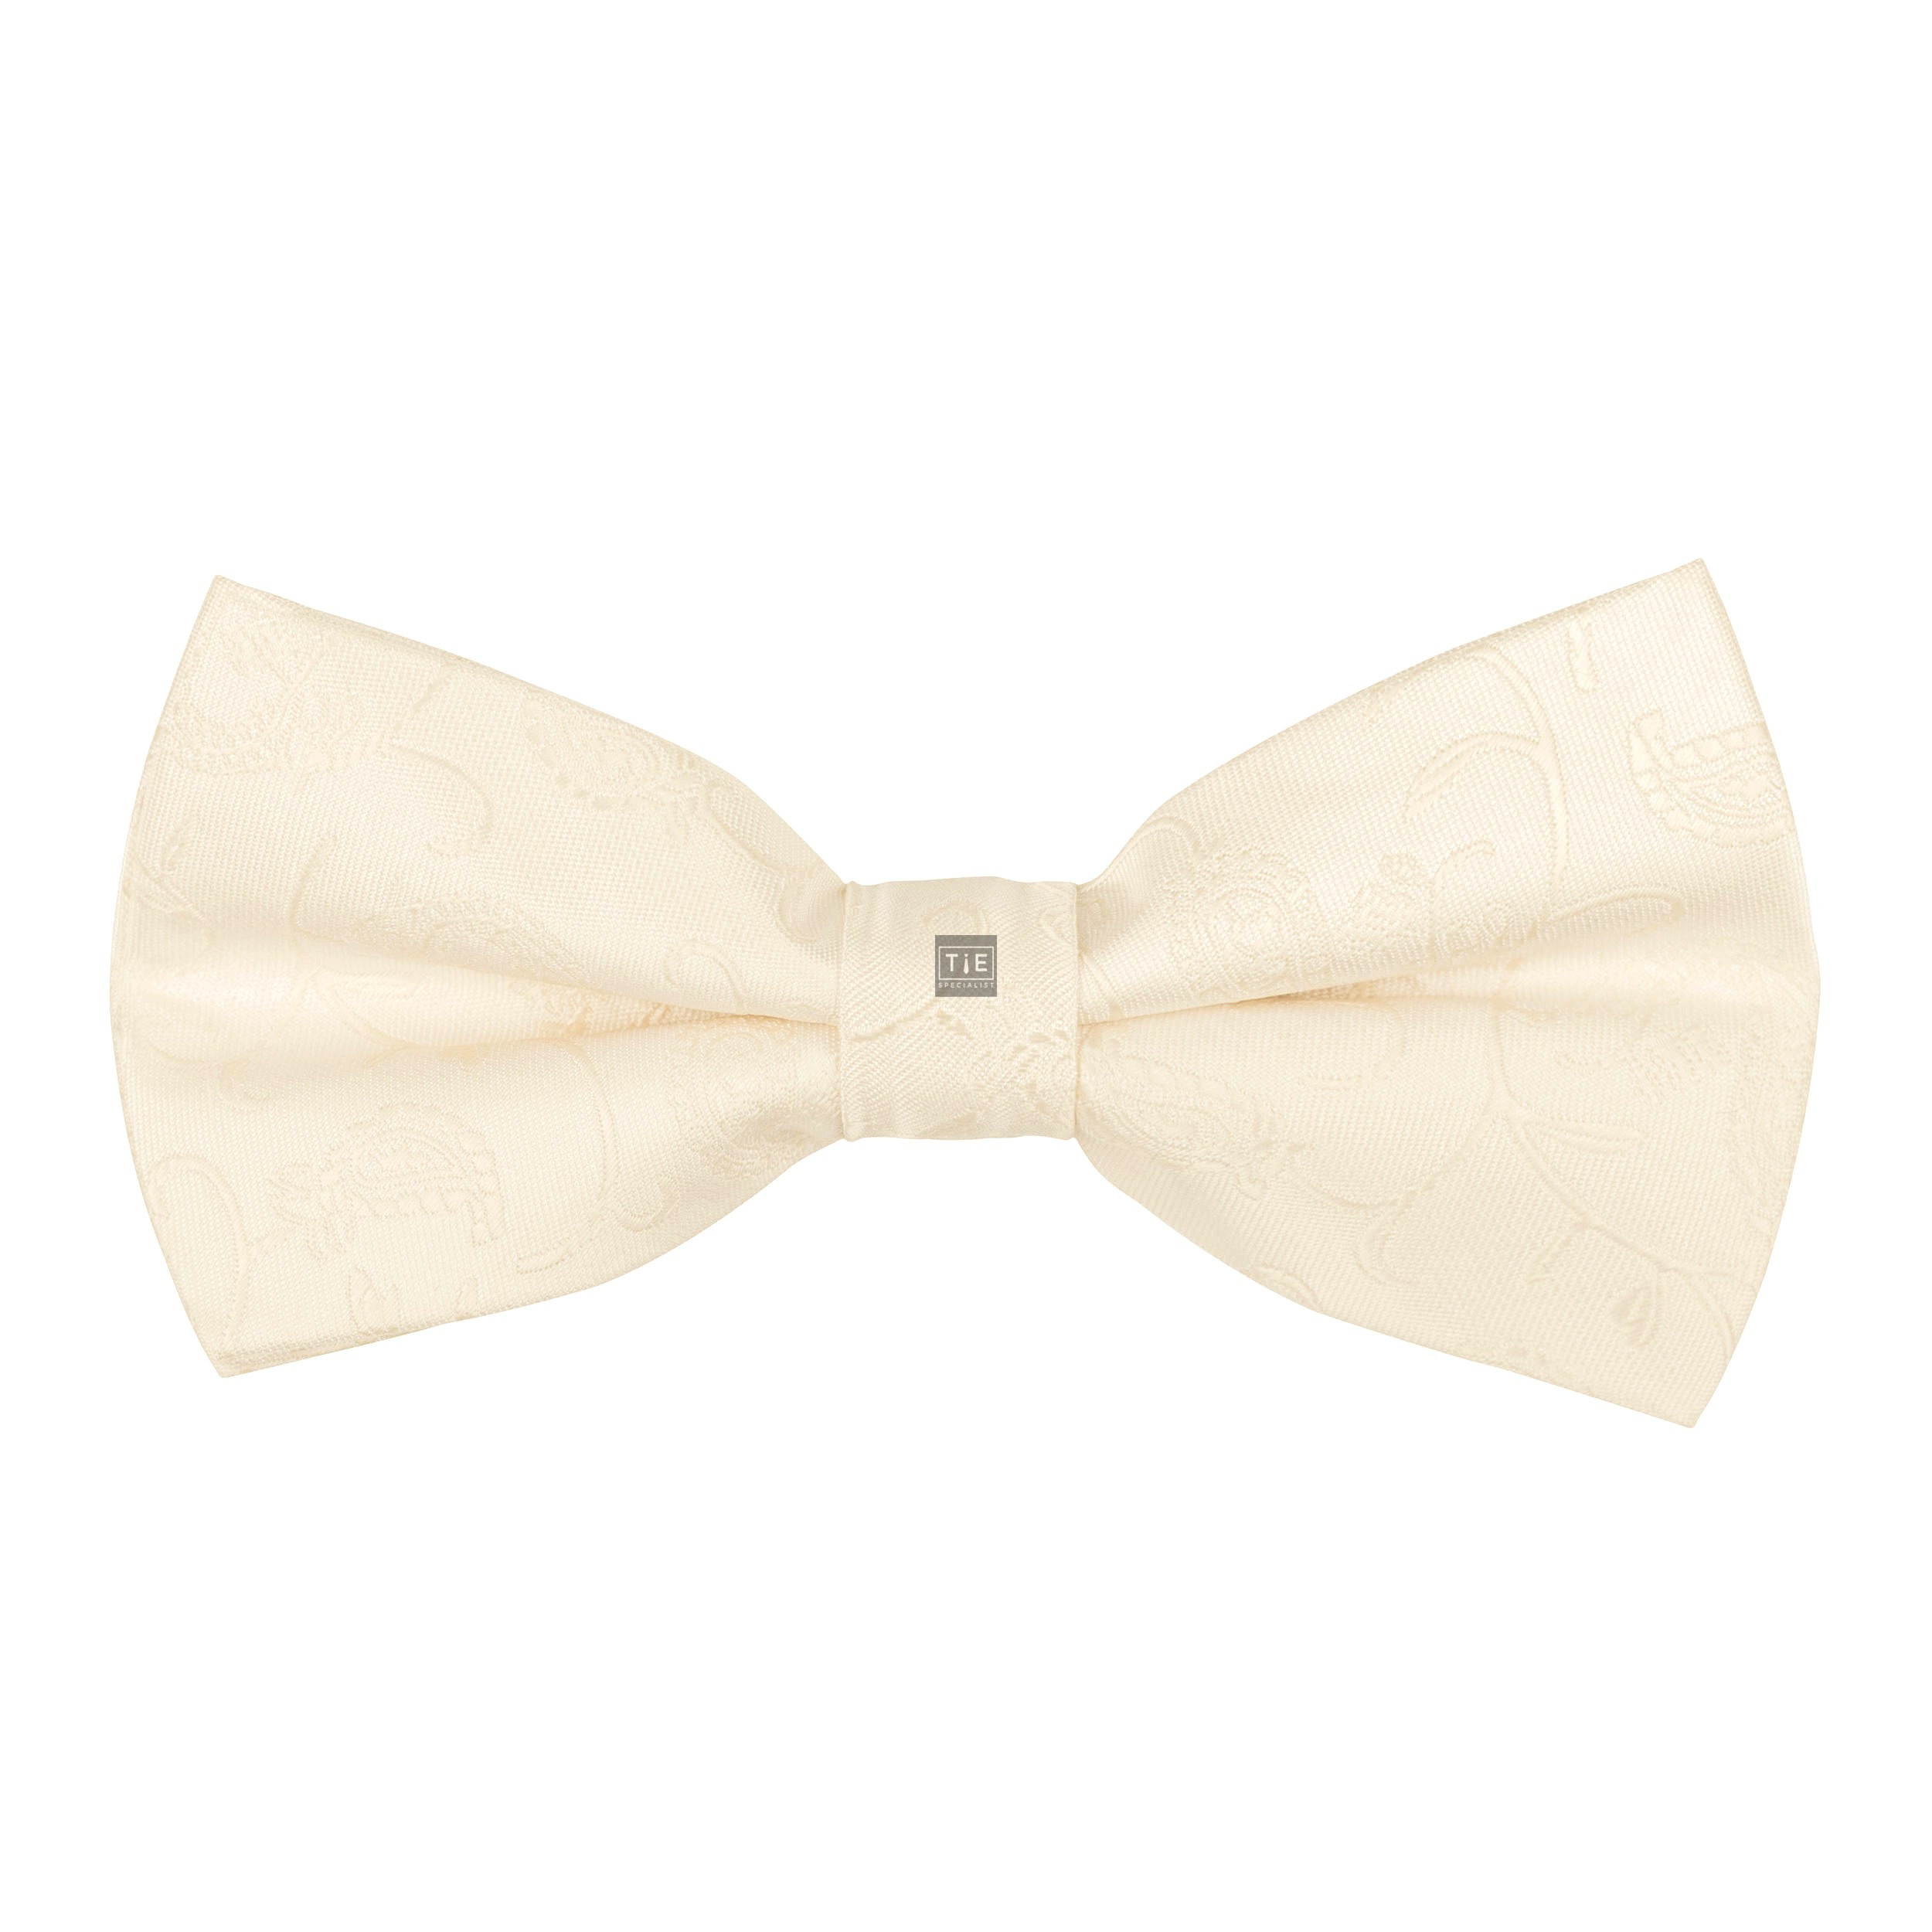 Cream Budding Paisley Bow Tie #AB-BB1003/9